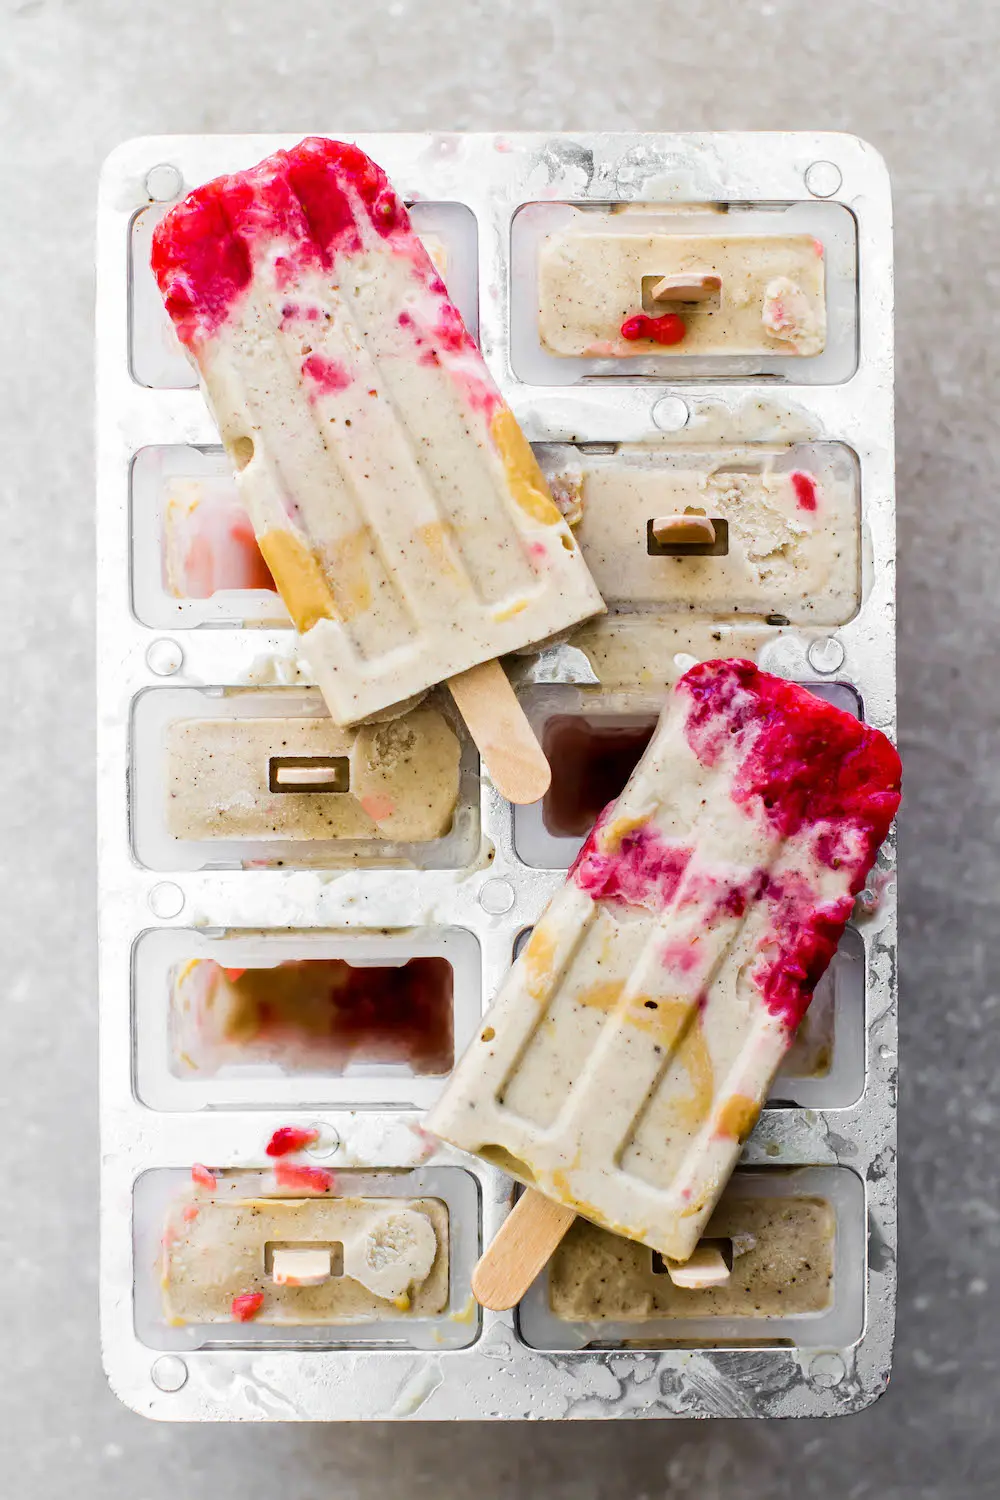 Strawberry Tahini Ice Cream Pops